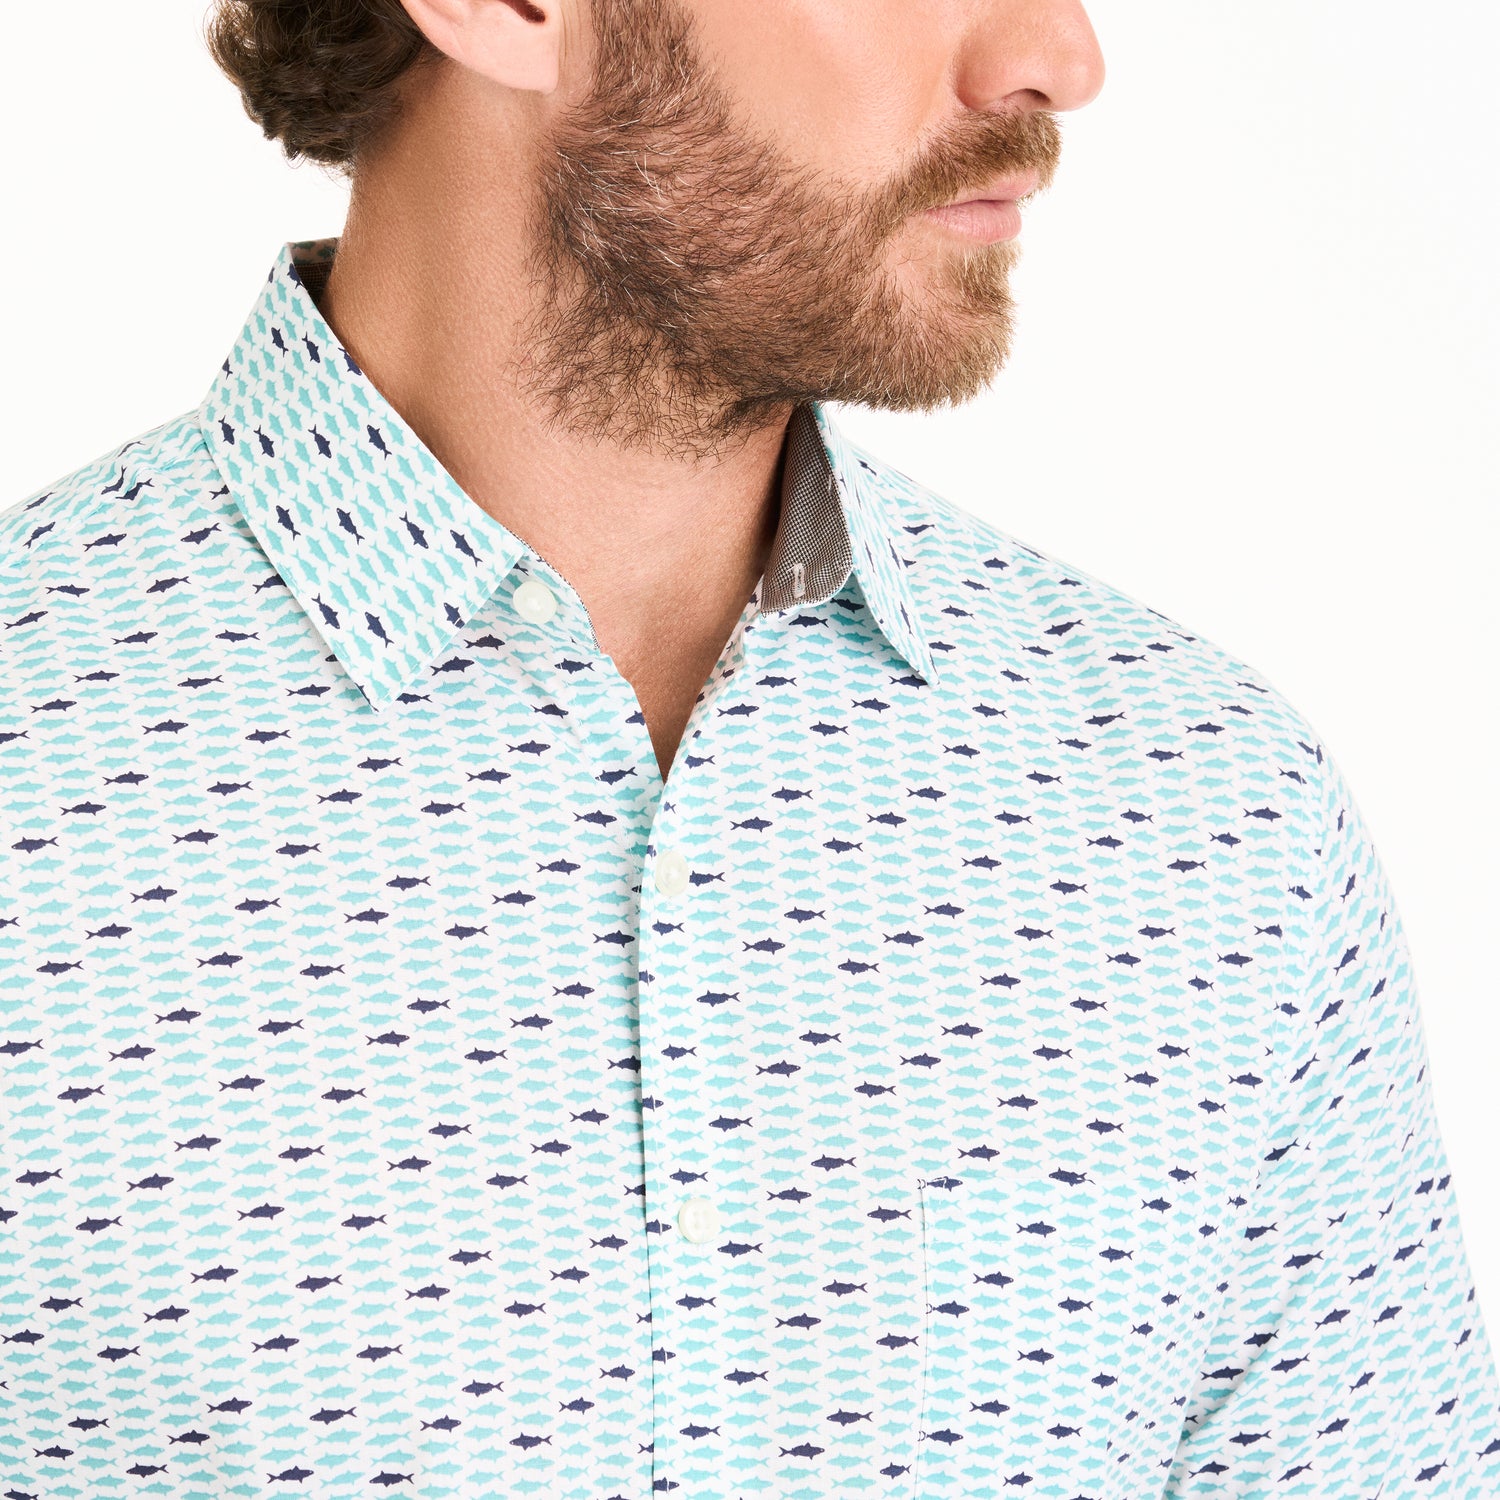 Essential Stain Shield Short Sleeve Shirt Shark School Print - Slim Fit